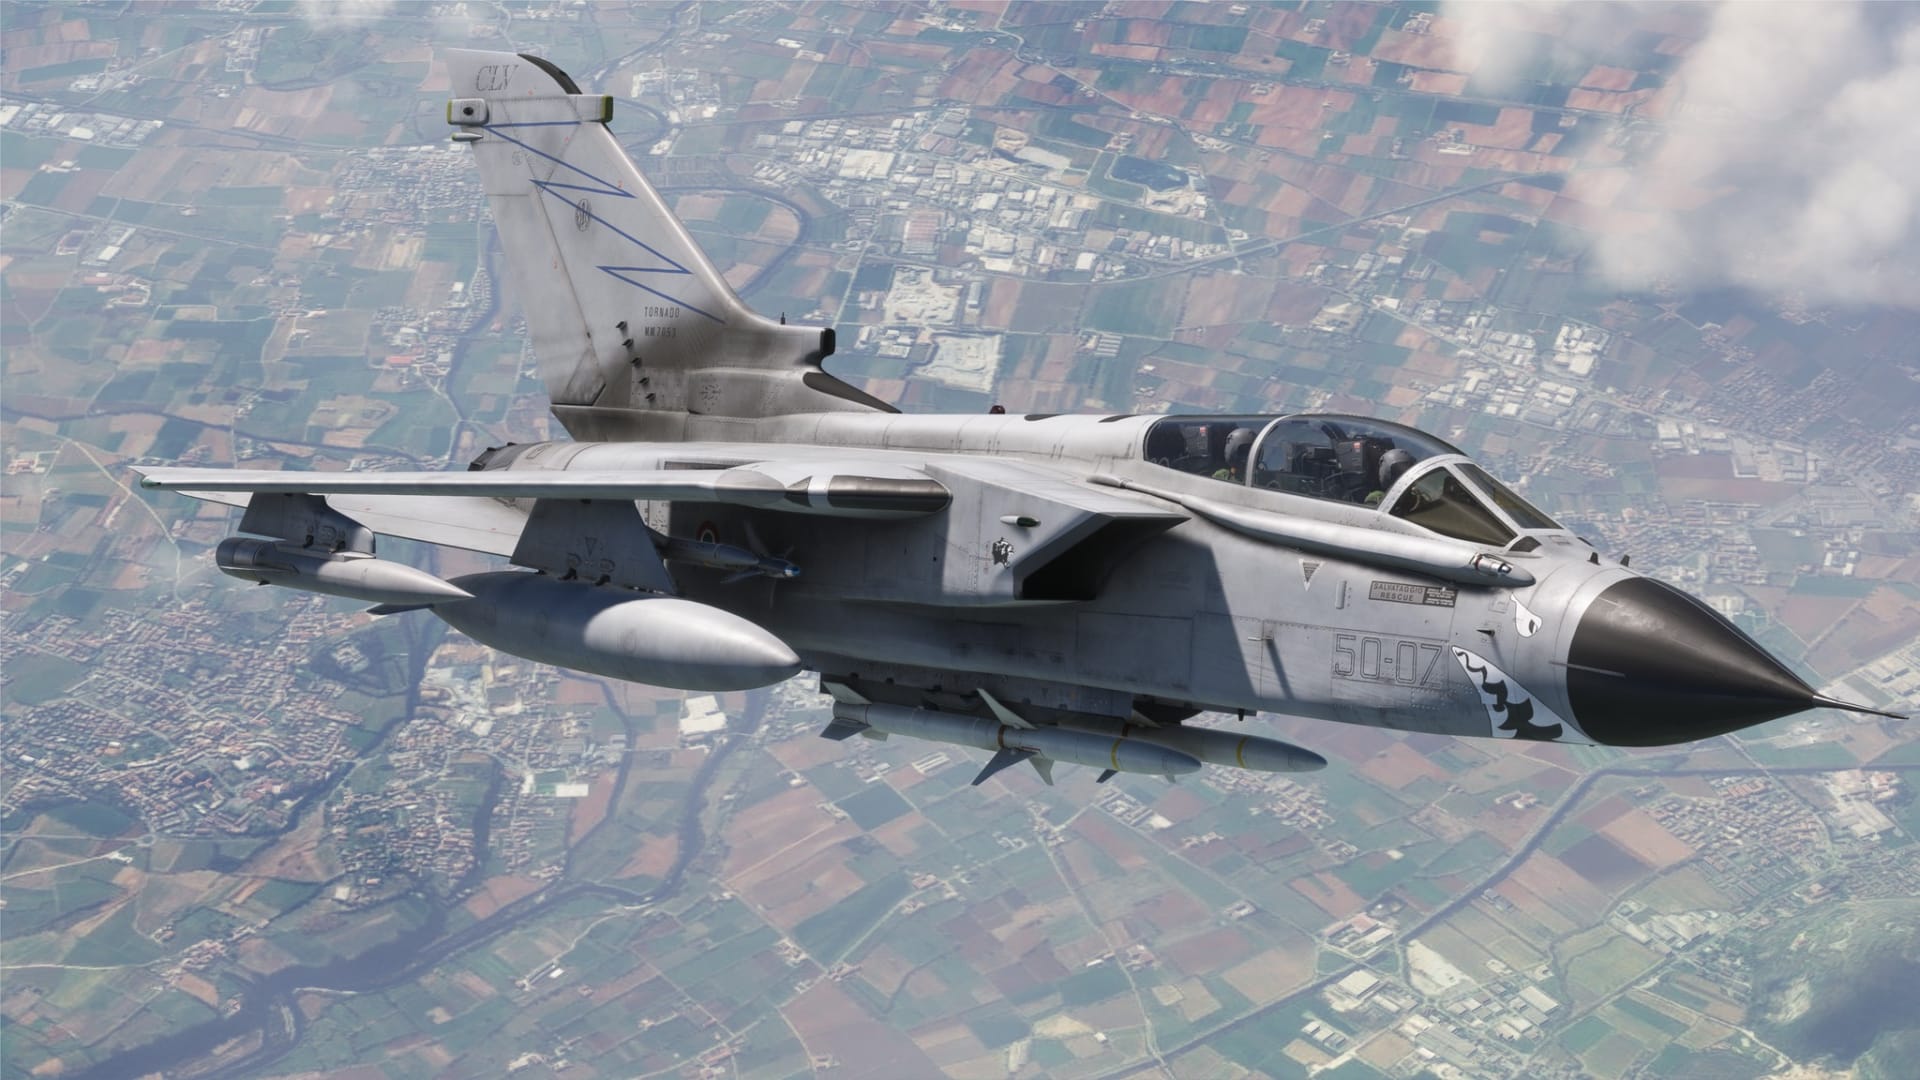 Microsoft Flight Simulator Tornado and Saab 340 and 2000 Get Development Updates, Lukla Announced